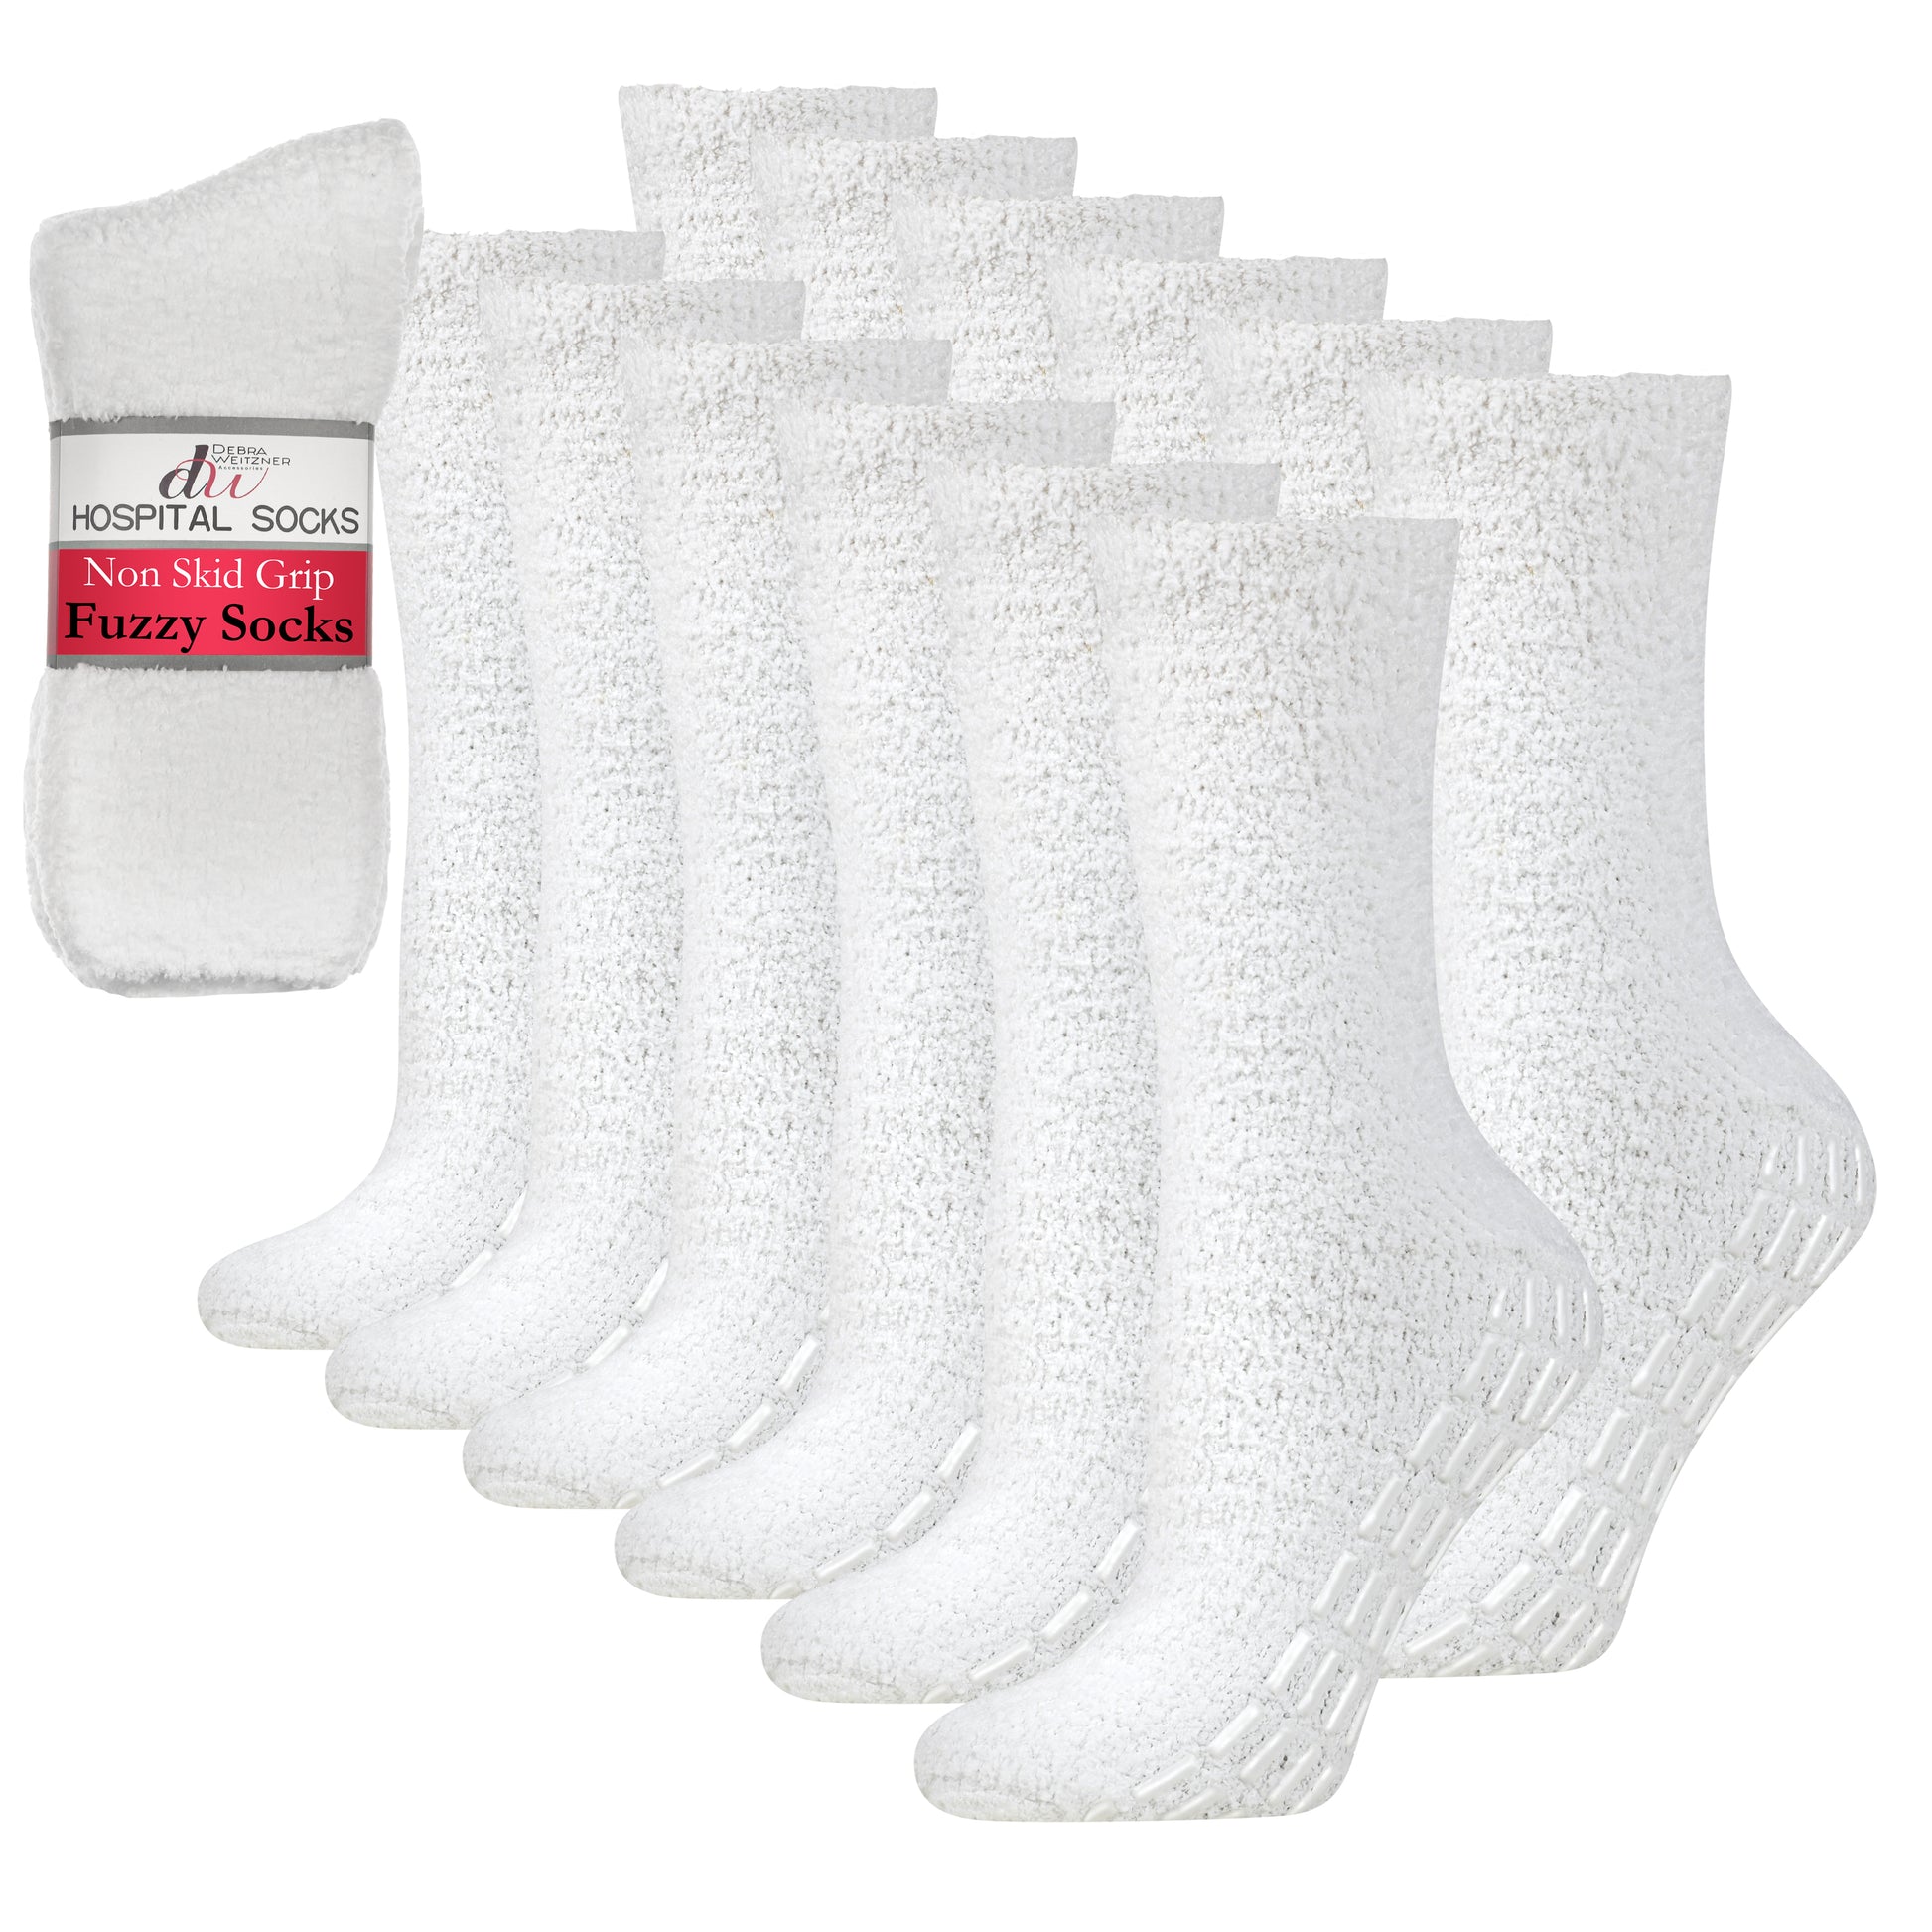 Fuzzy Hospital Socks - Non Slip Grip - 6 Pairs – Debra Weitzner